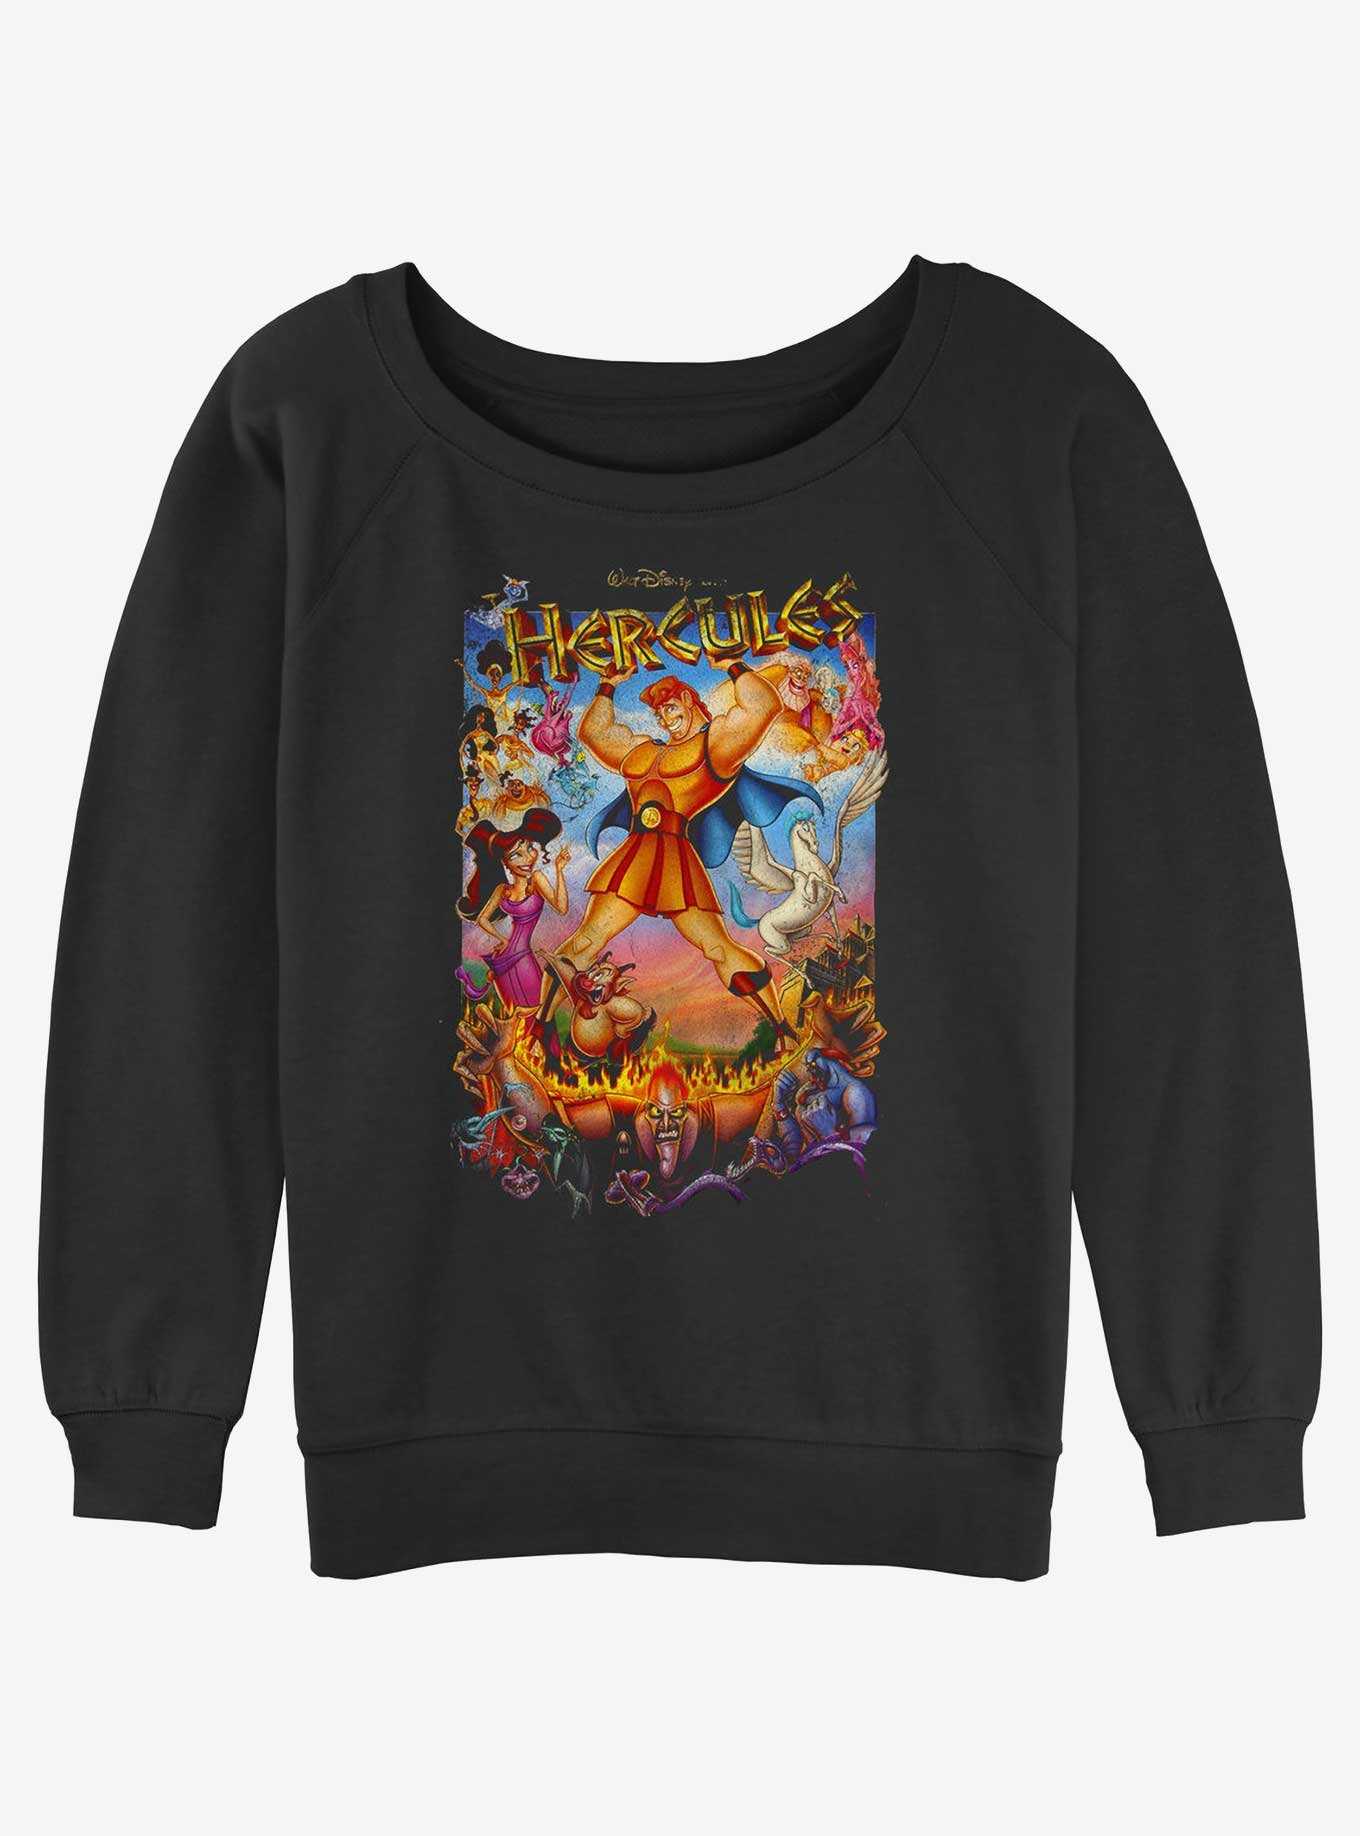 Disney Hercules Poster Girls Slouchy Sweatshirt, , hi-res